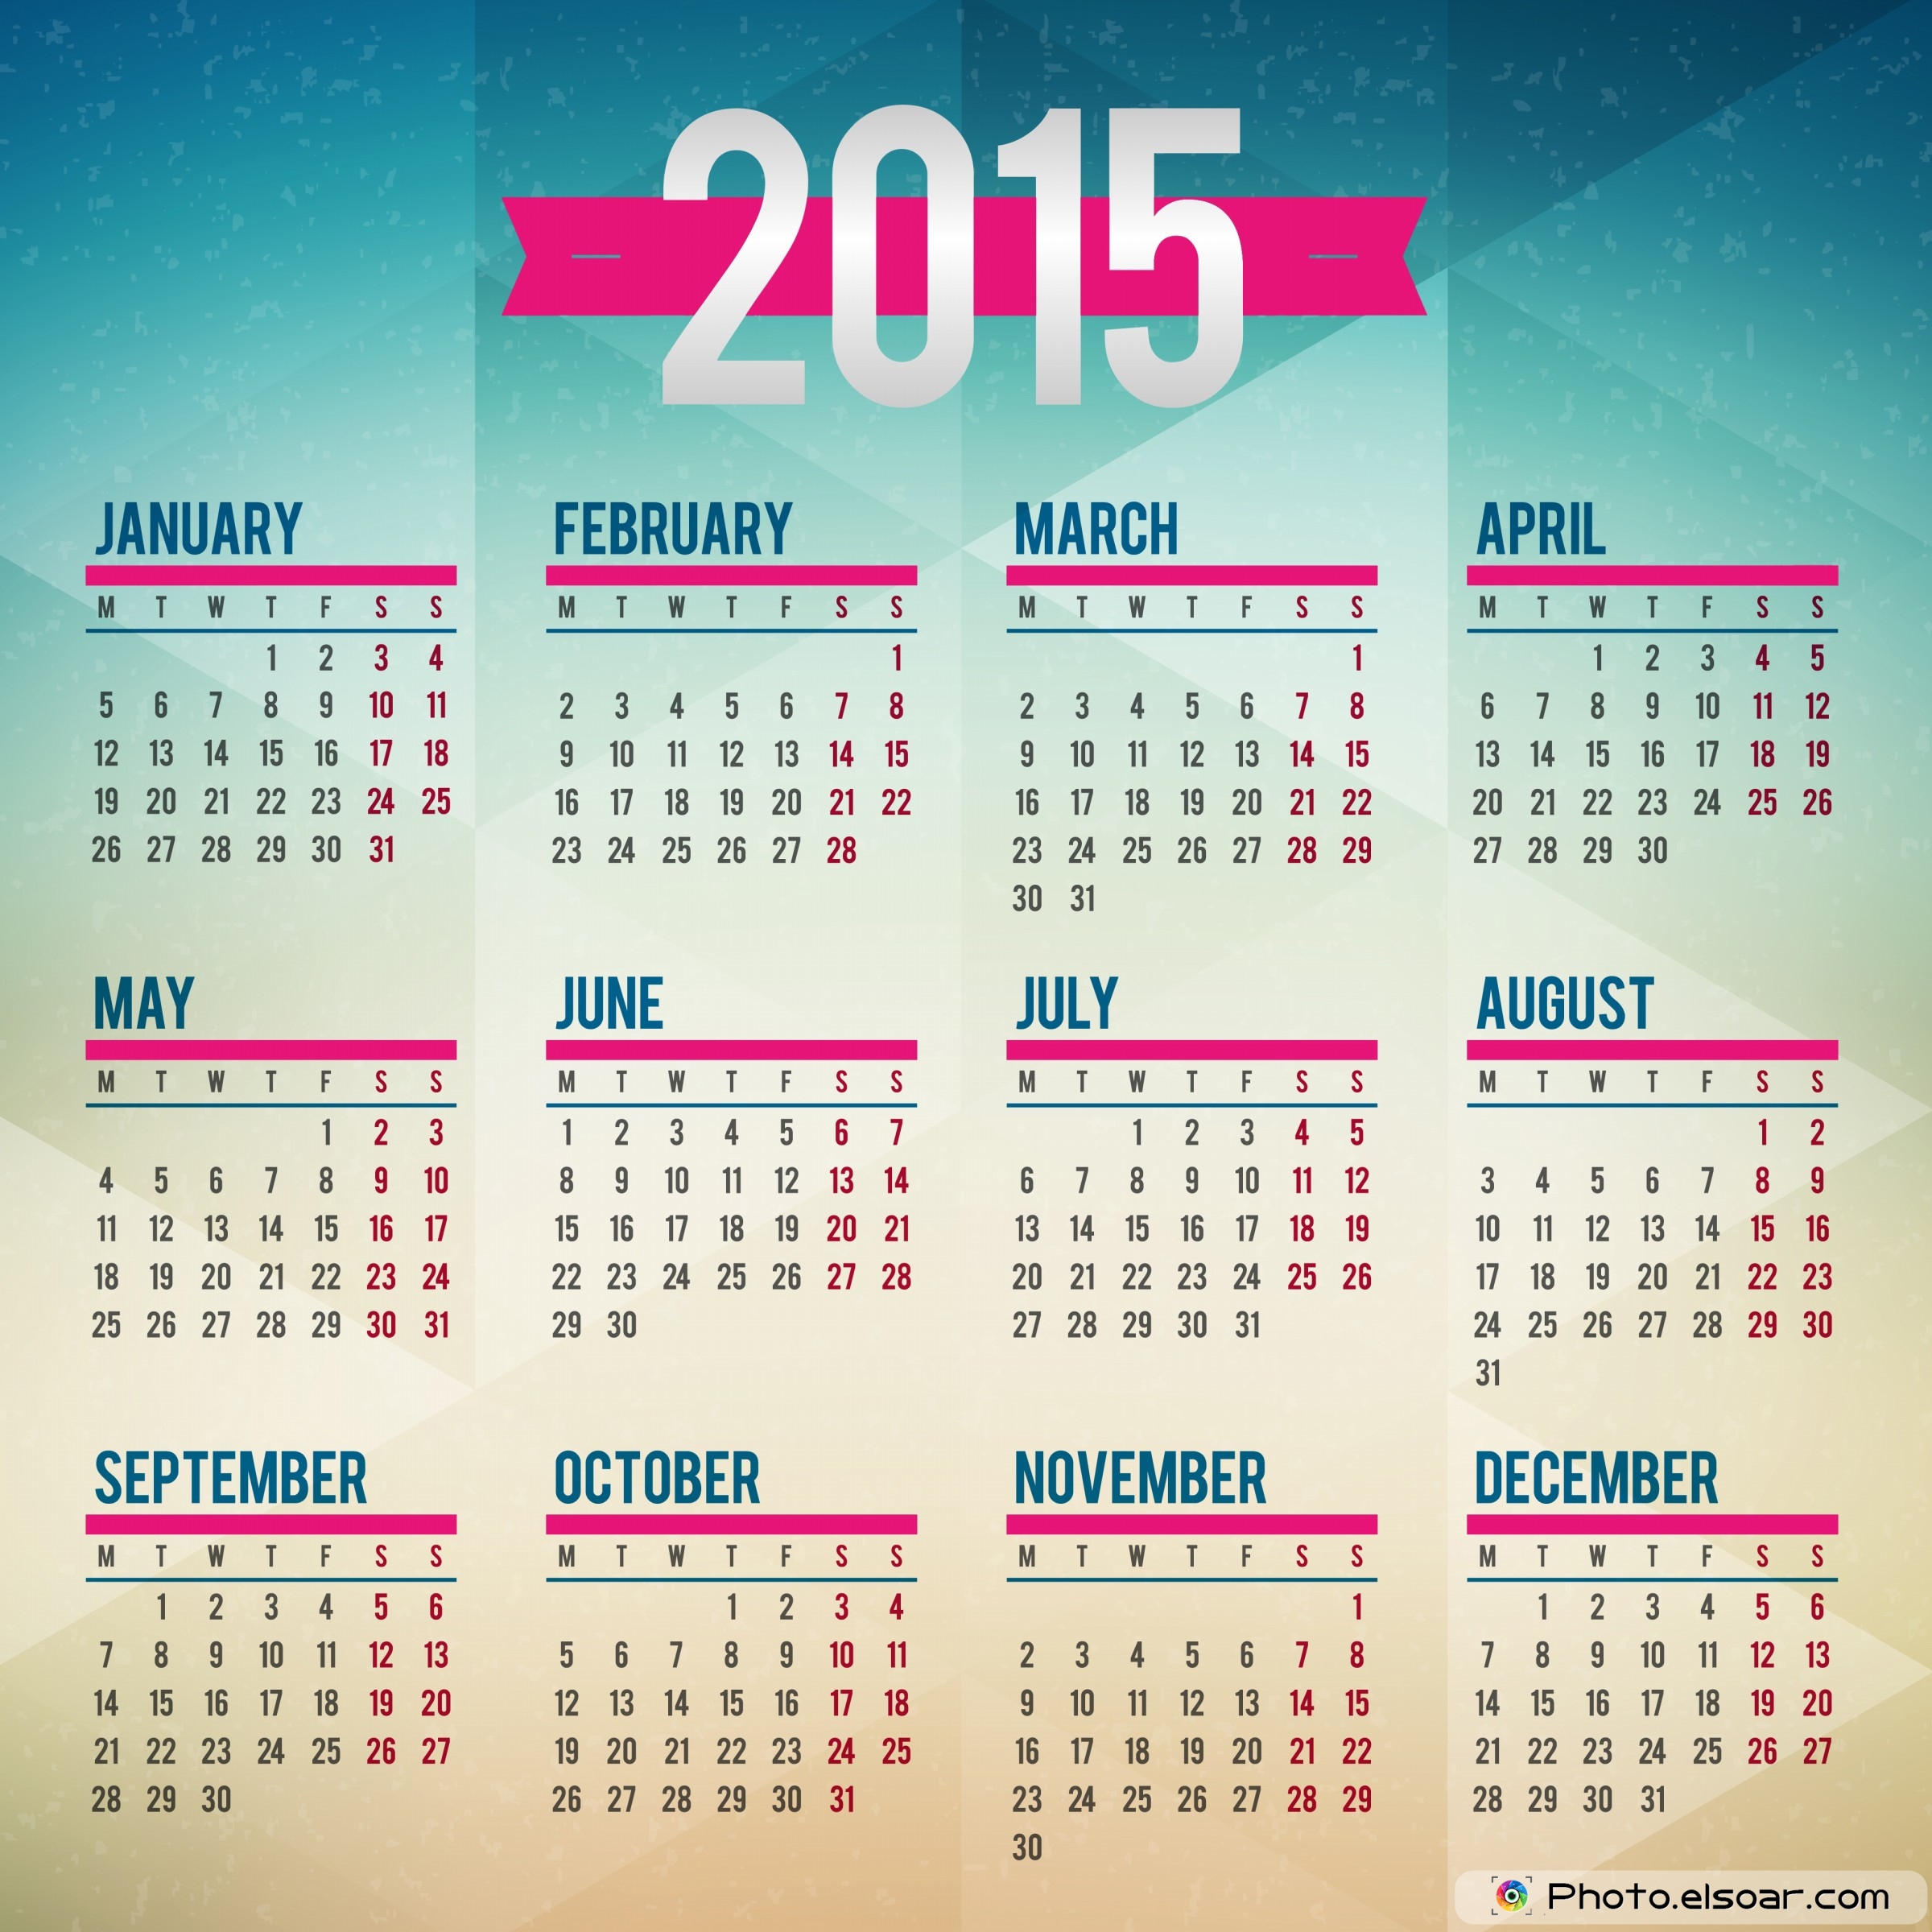 2015 calendar photoshop free download